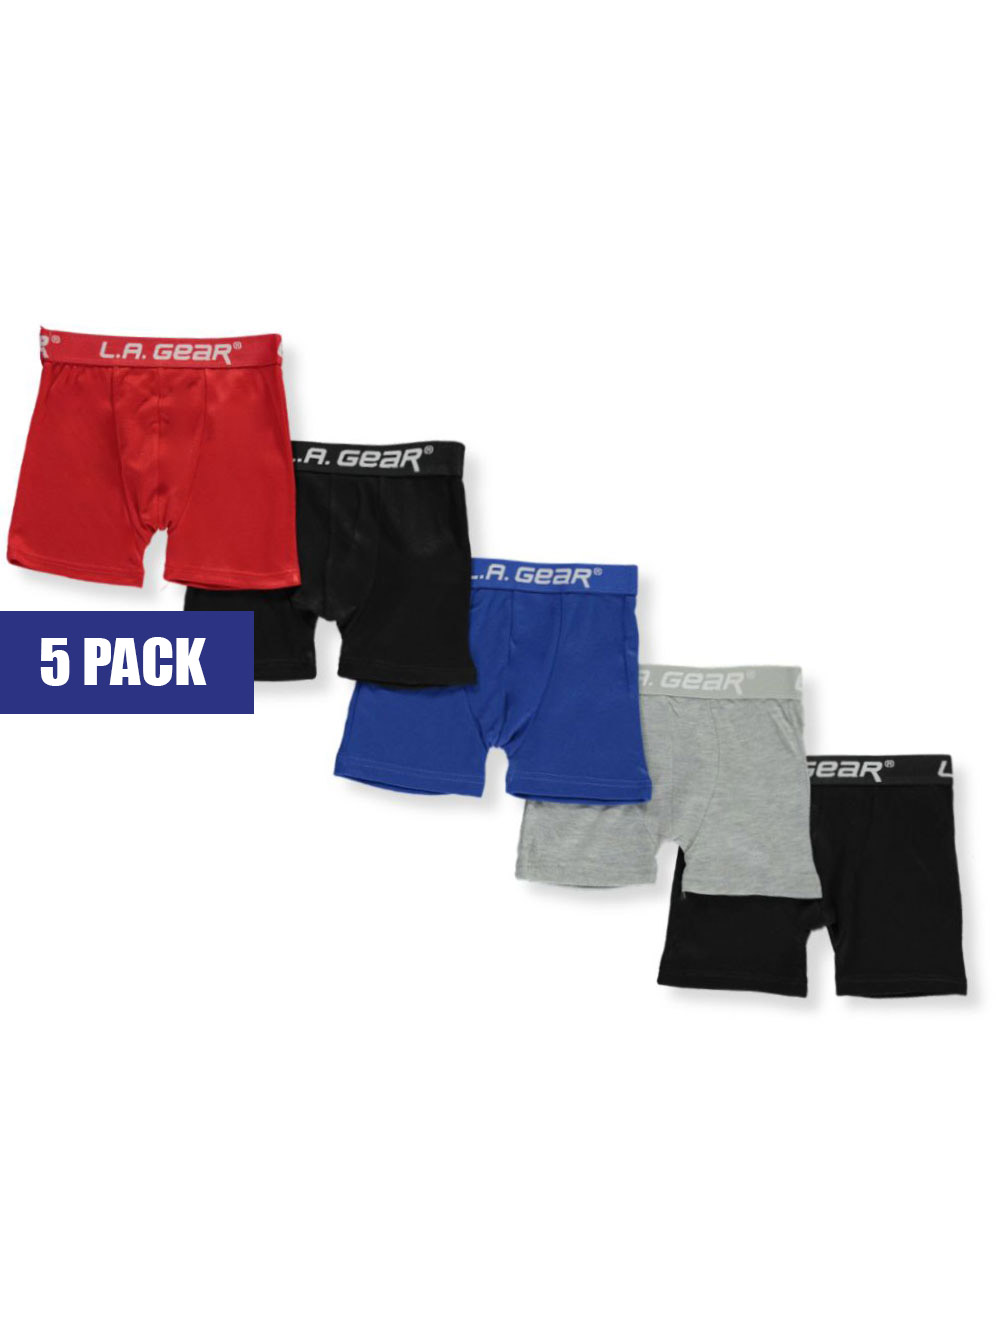 Comprar Nautica Boys' Underwear - 6 Pack Stretch Cotton Boxer